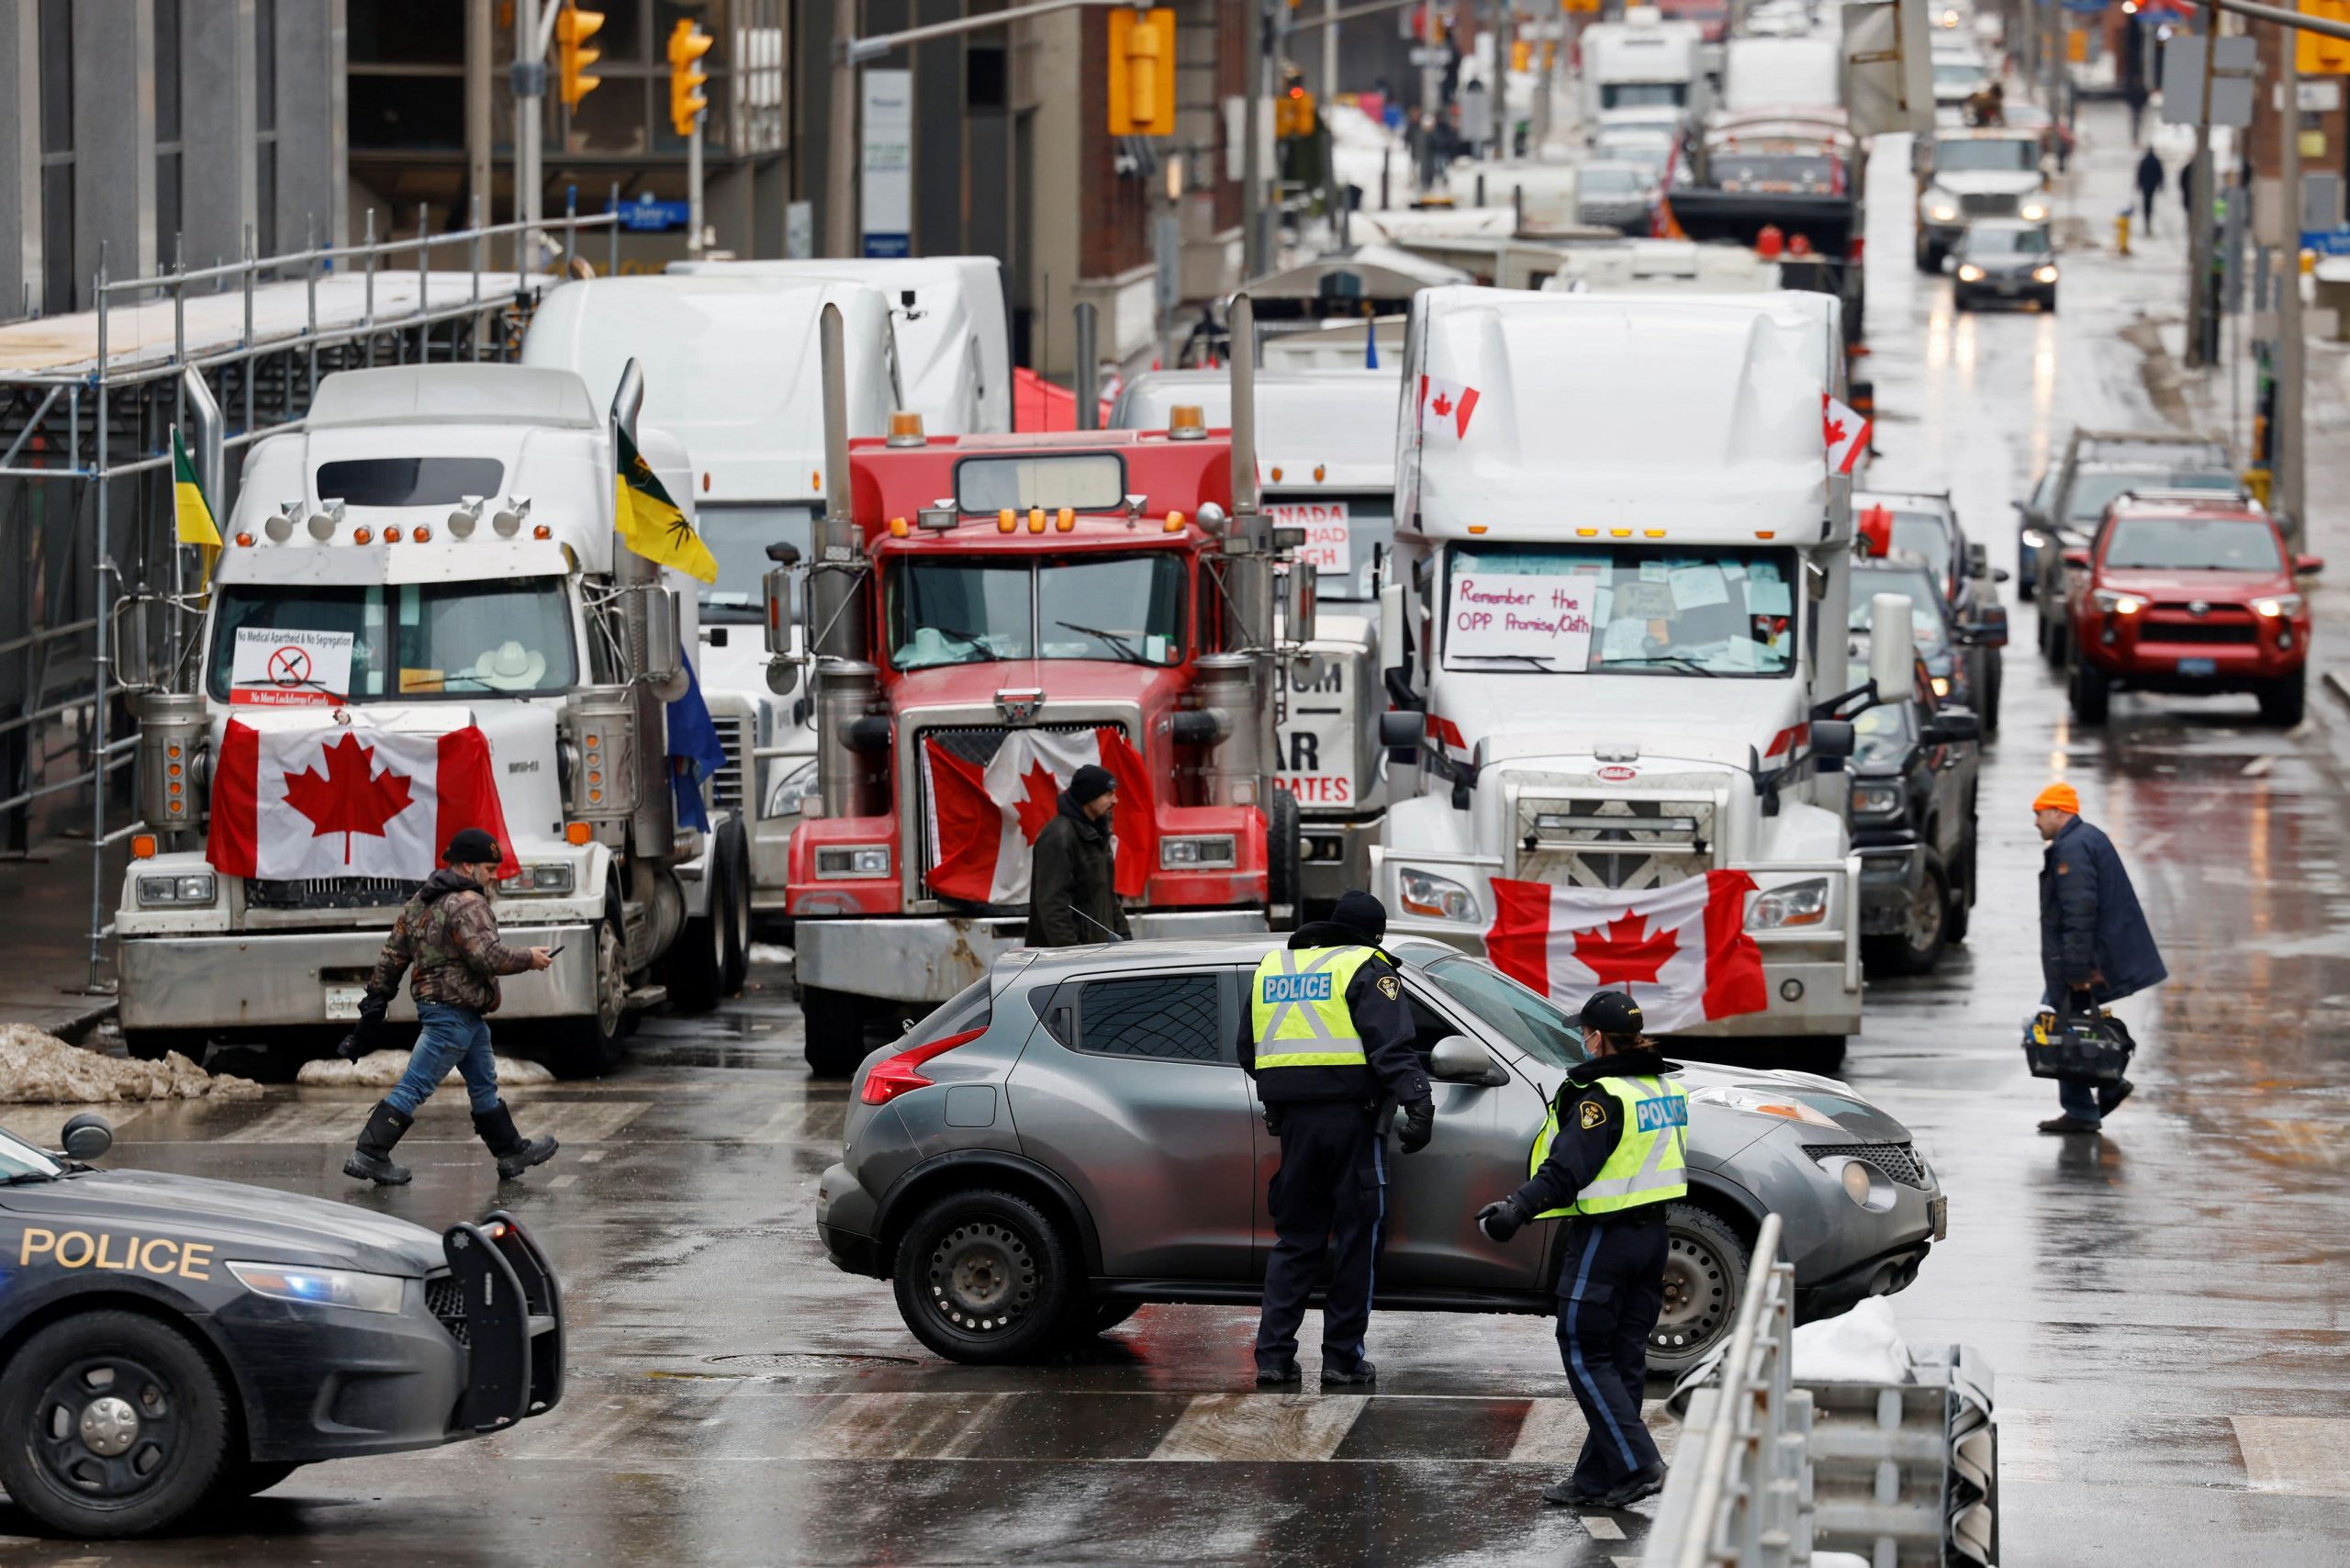 Judge grants injunction to end Canadian bridge blockade, remove protesters